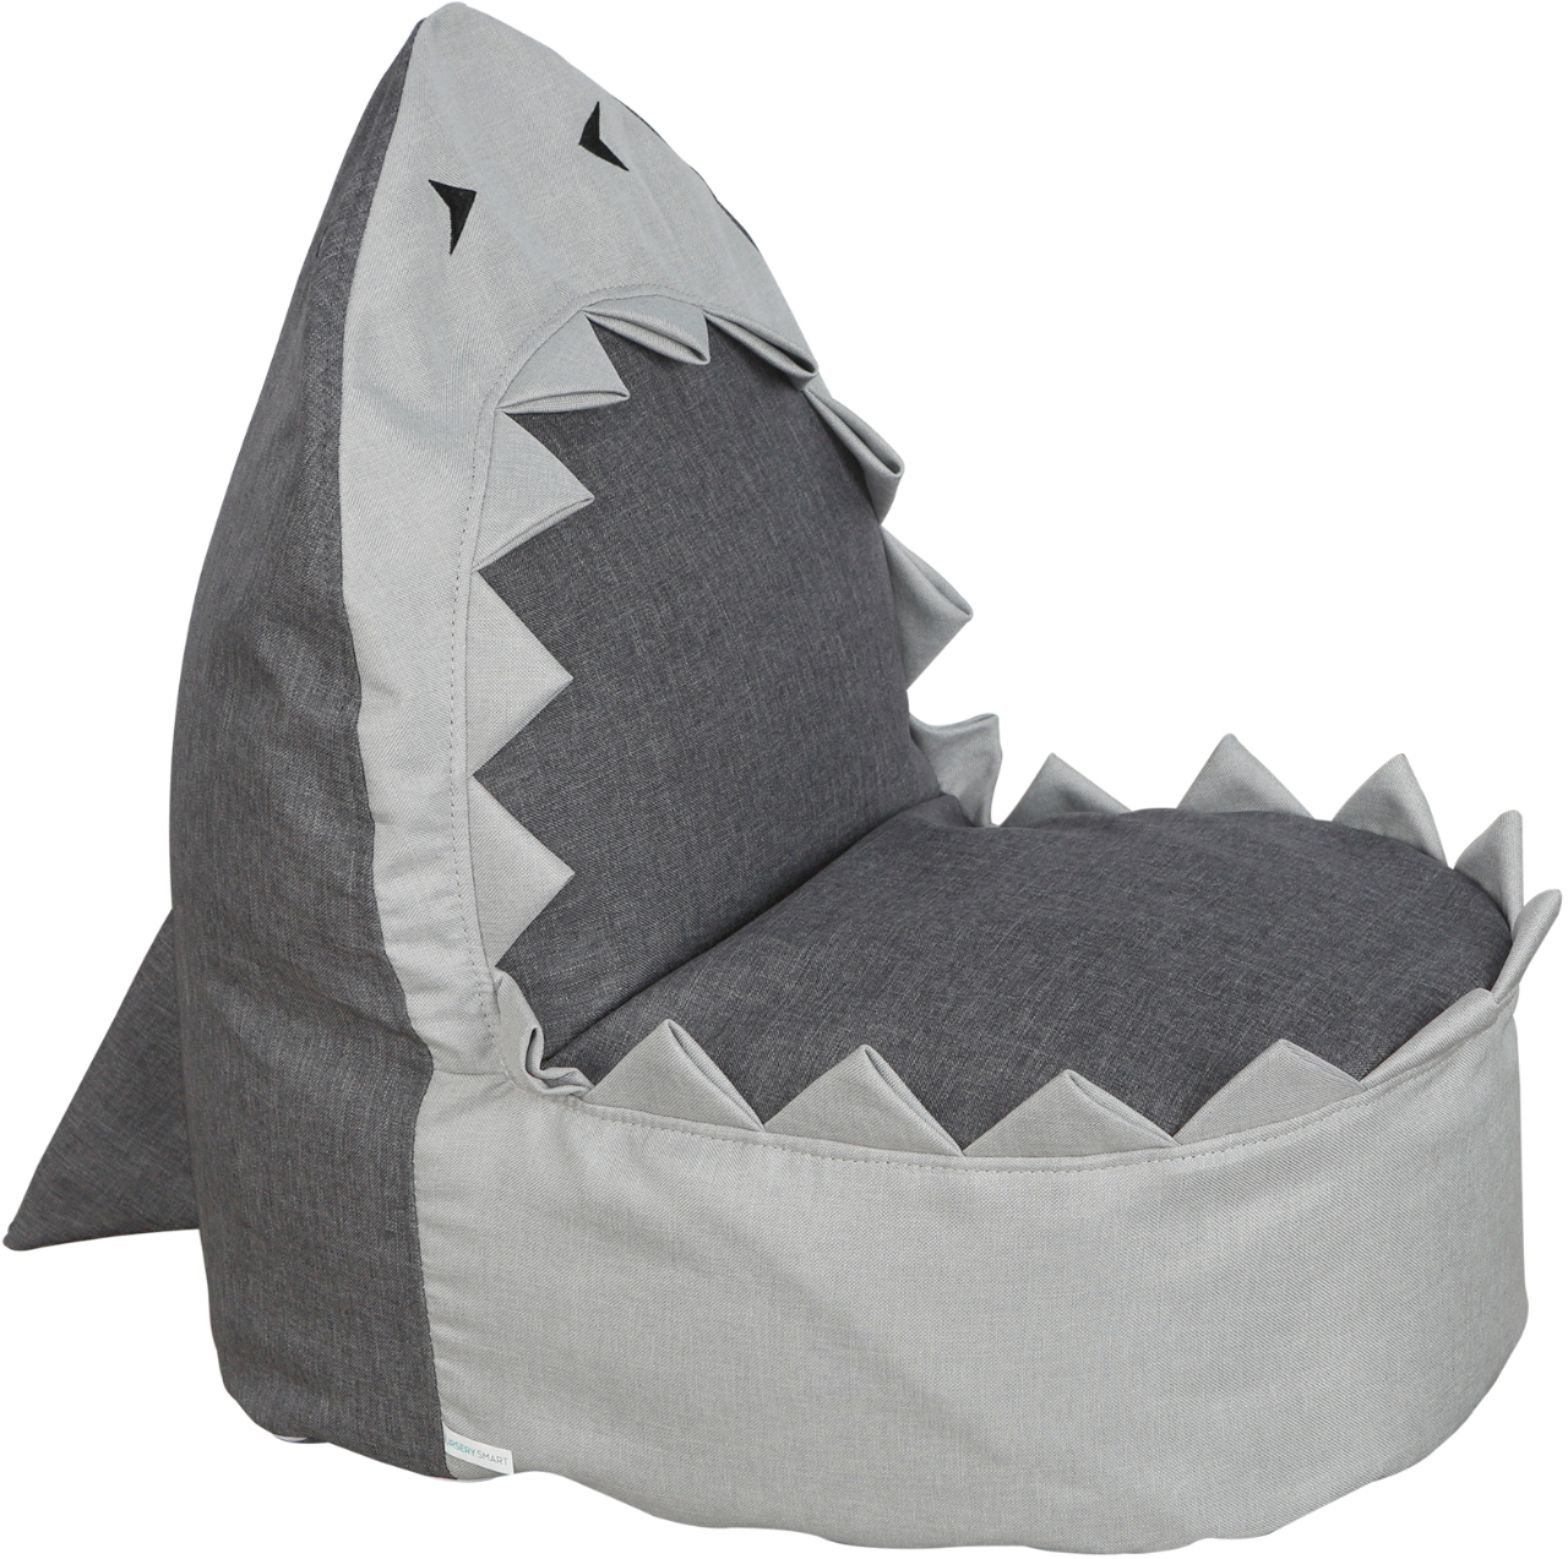 Angle View: Karla Dubois - Sharky the Shark Bean Bag - Gray